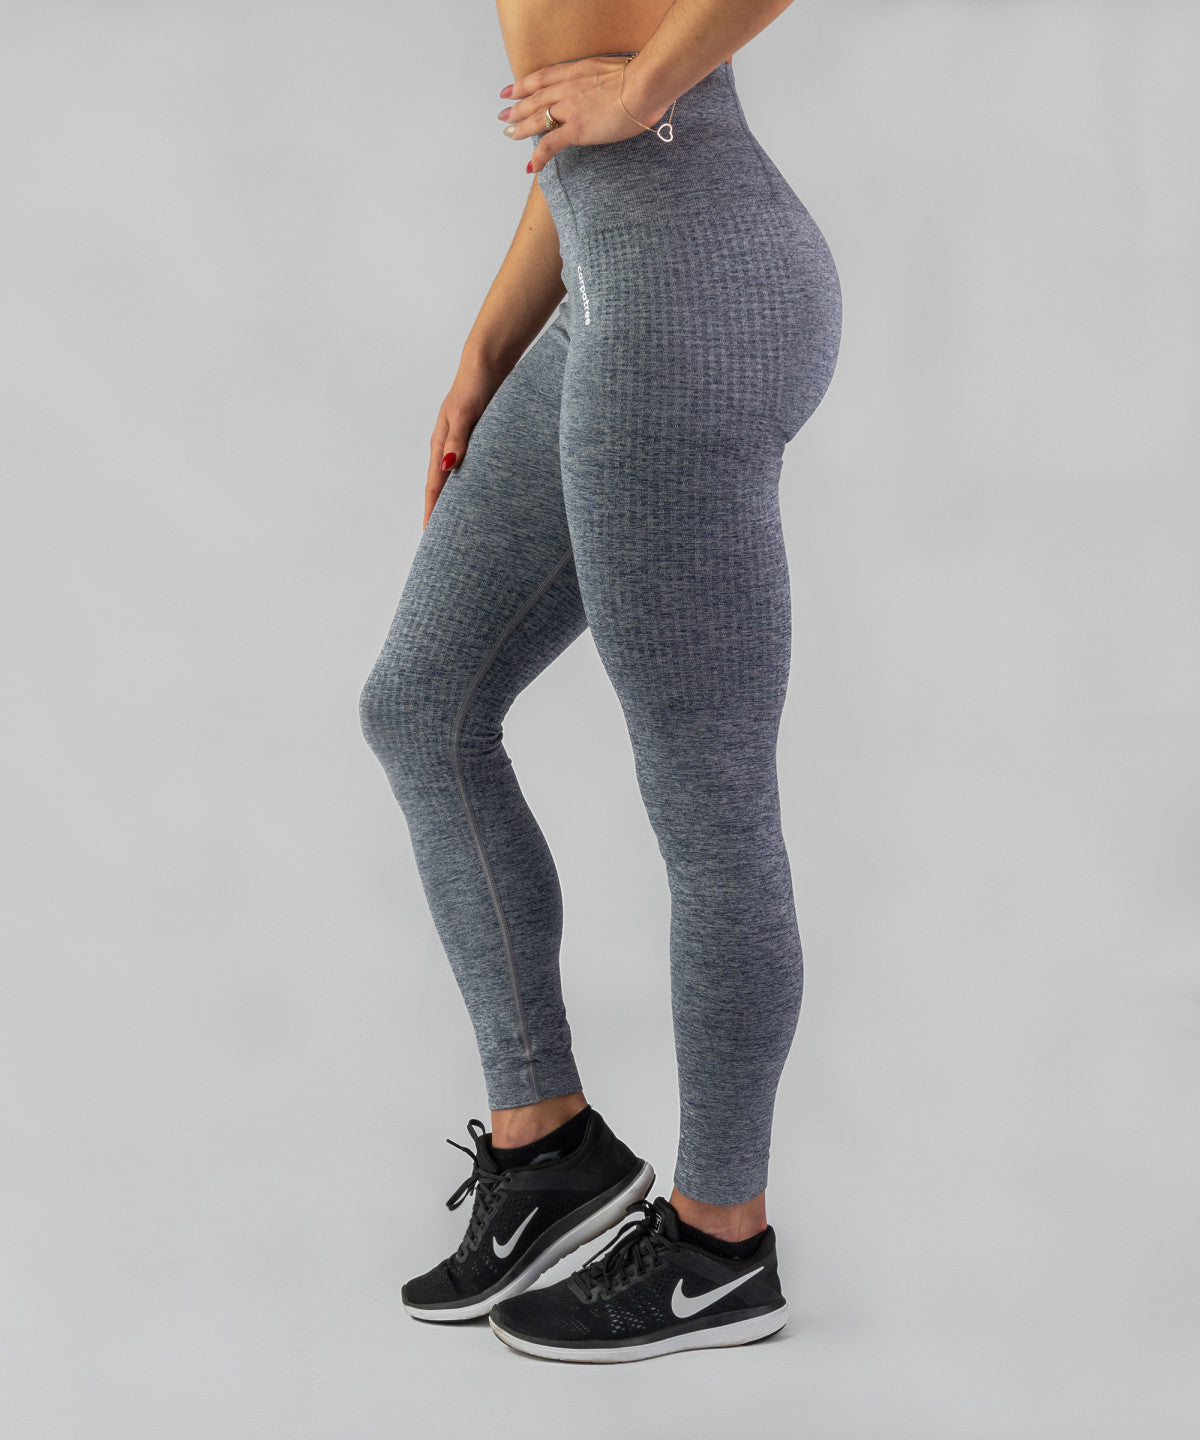 Carpatree Model One Seamless Leggings - grey high waisted activewear sports leggings